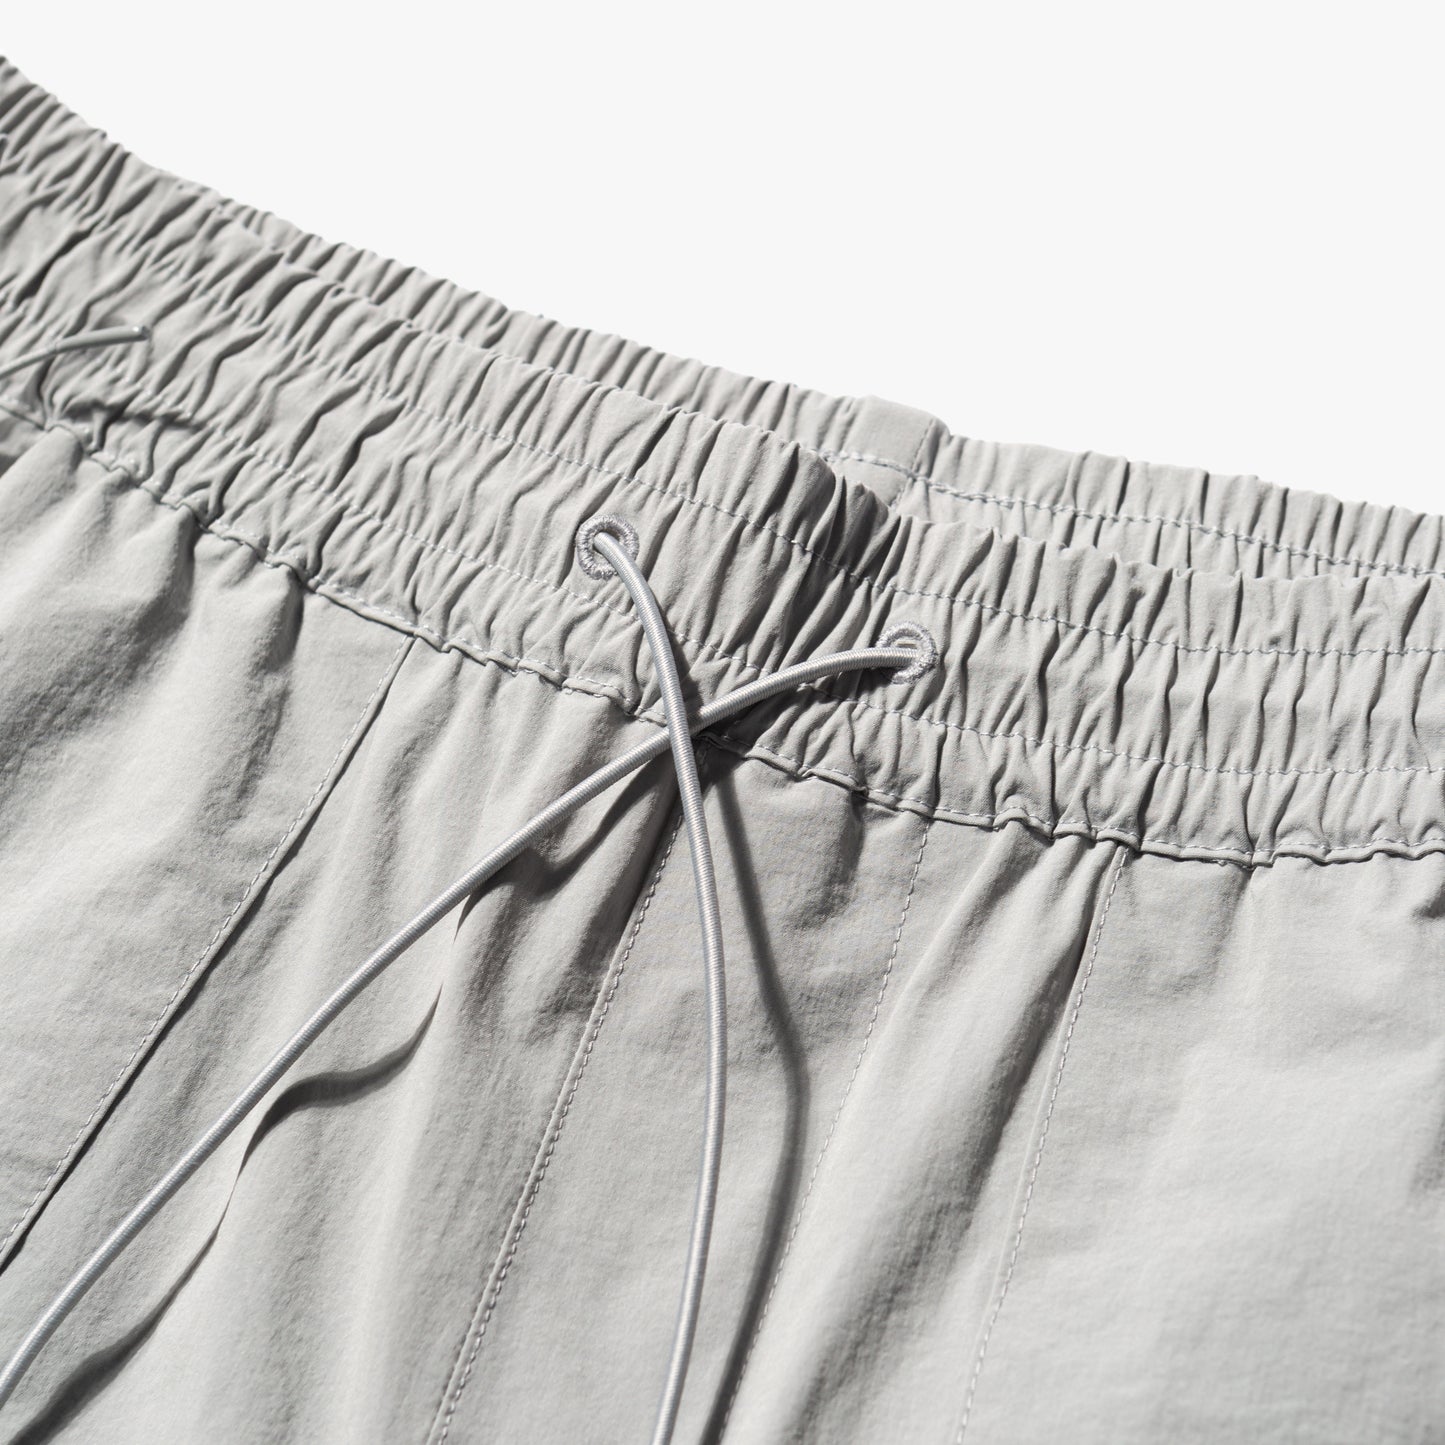 Ray Tech Cargo Shorts (Grey/White)